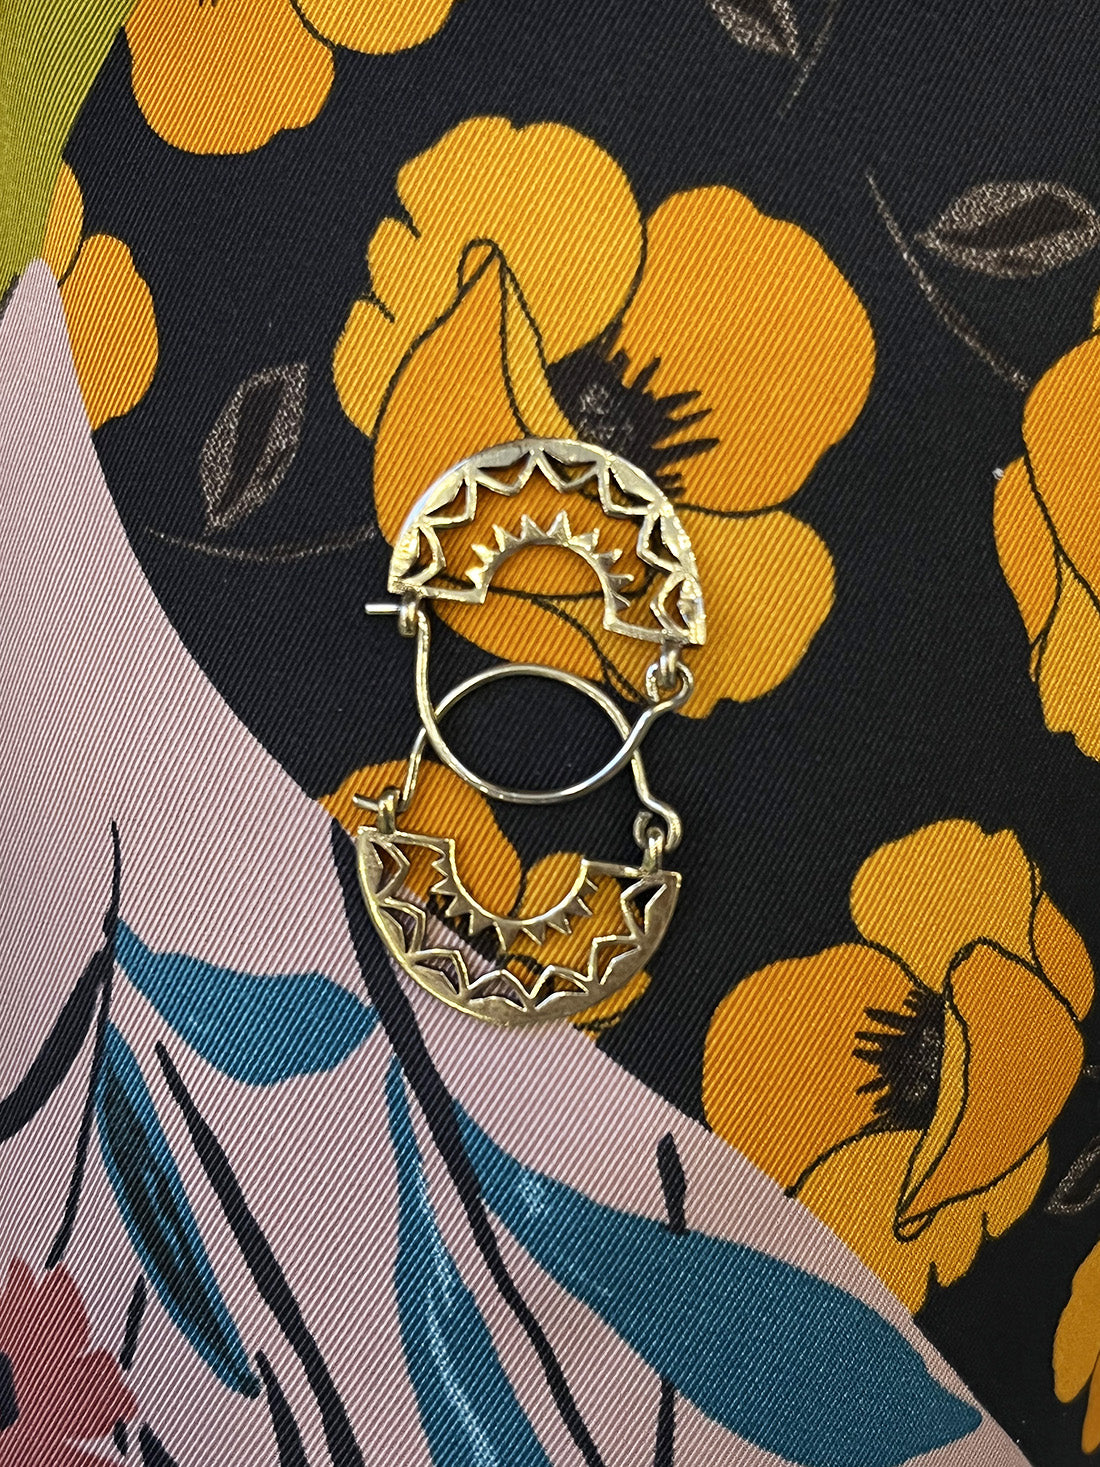 Gold Fan Earrings with Triangular Design